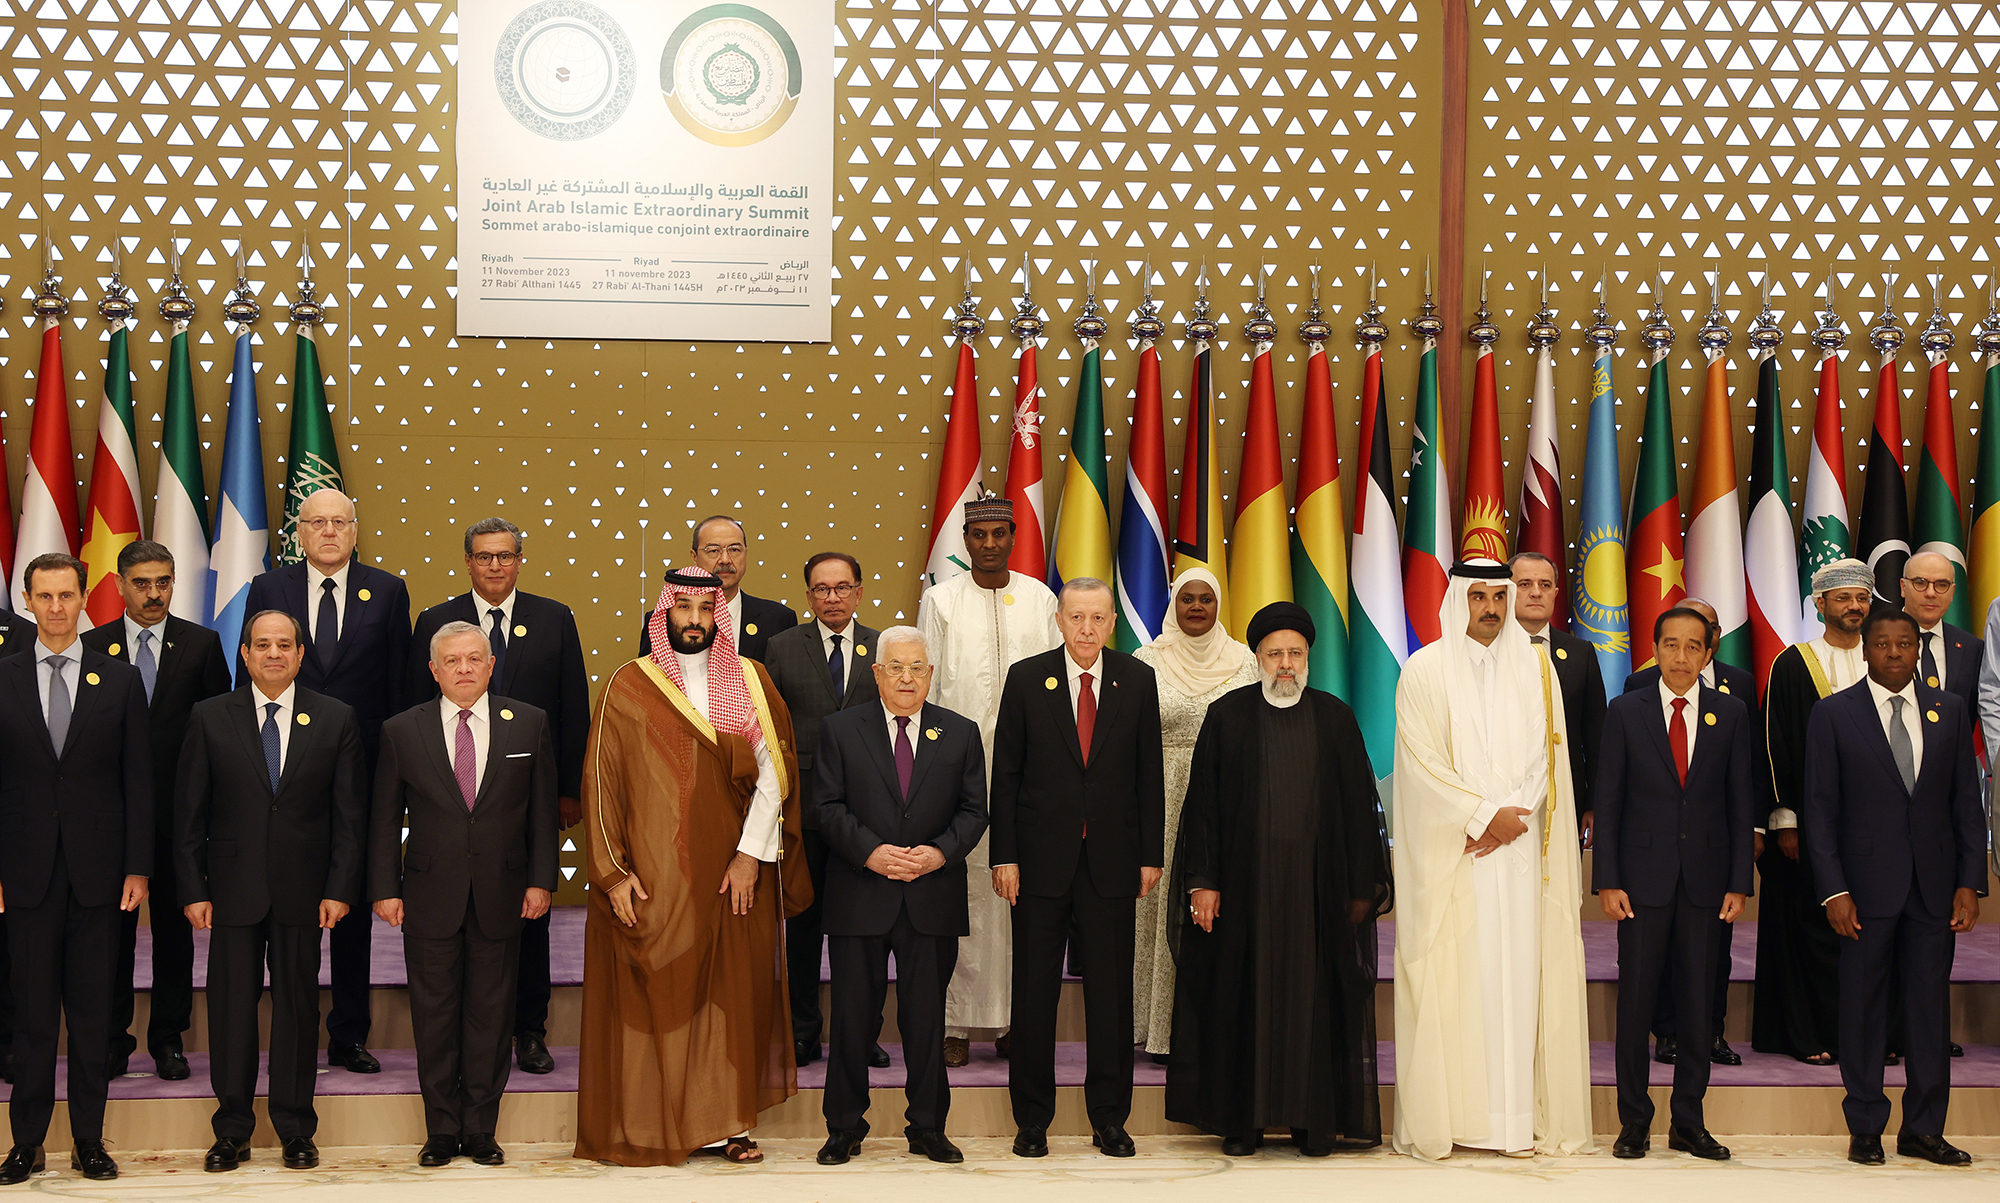 Leaders pose for a photo at the Extraordinary Summit in Riyadh, Saudi Arabia, on November 11. 